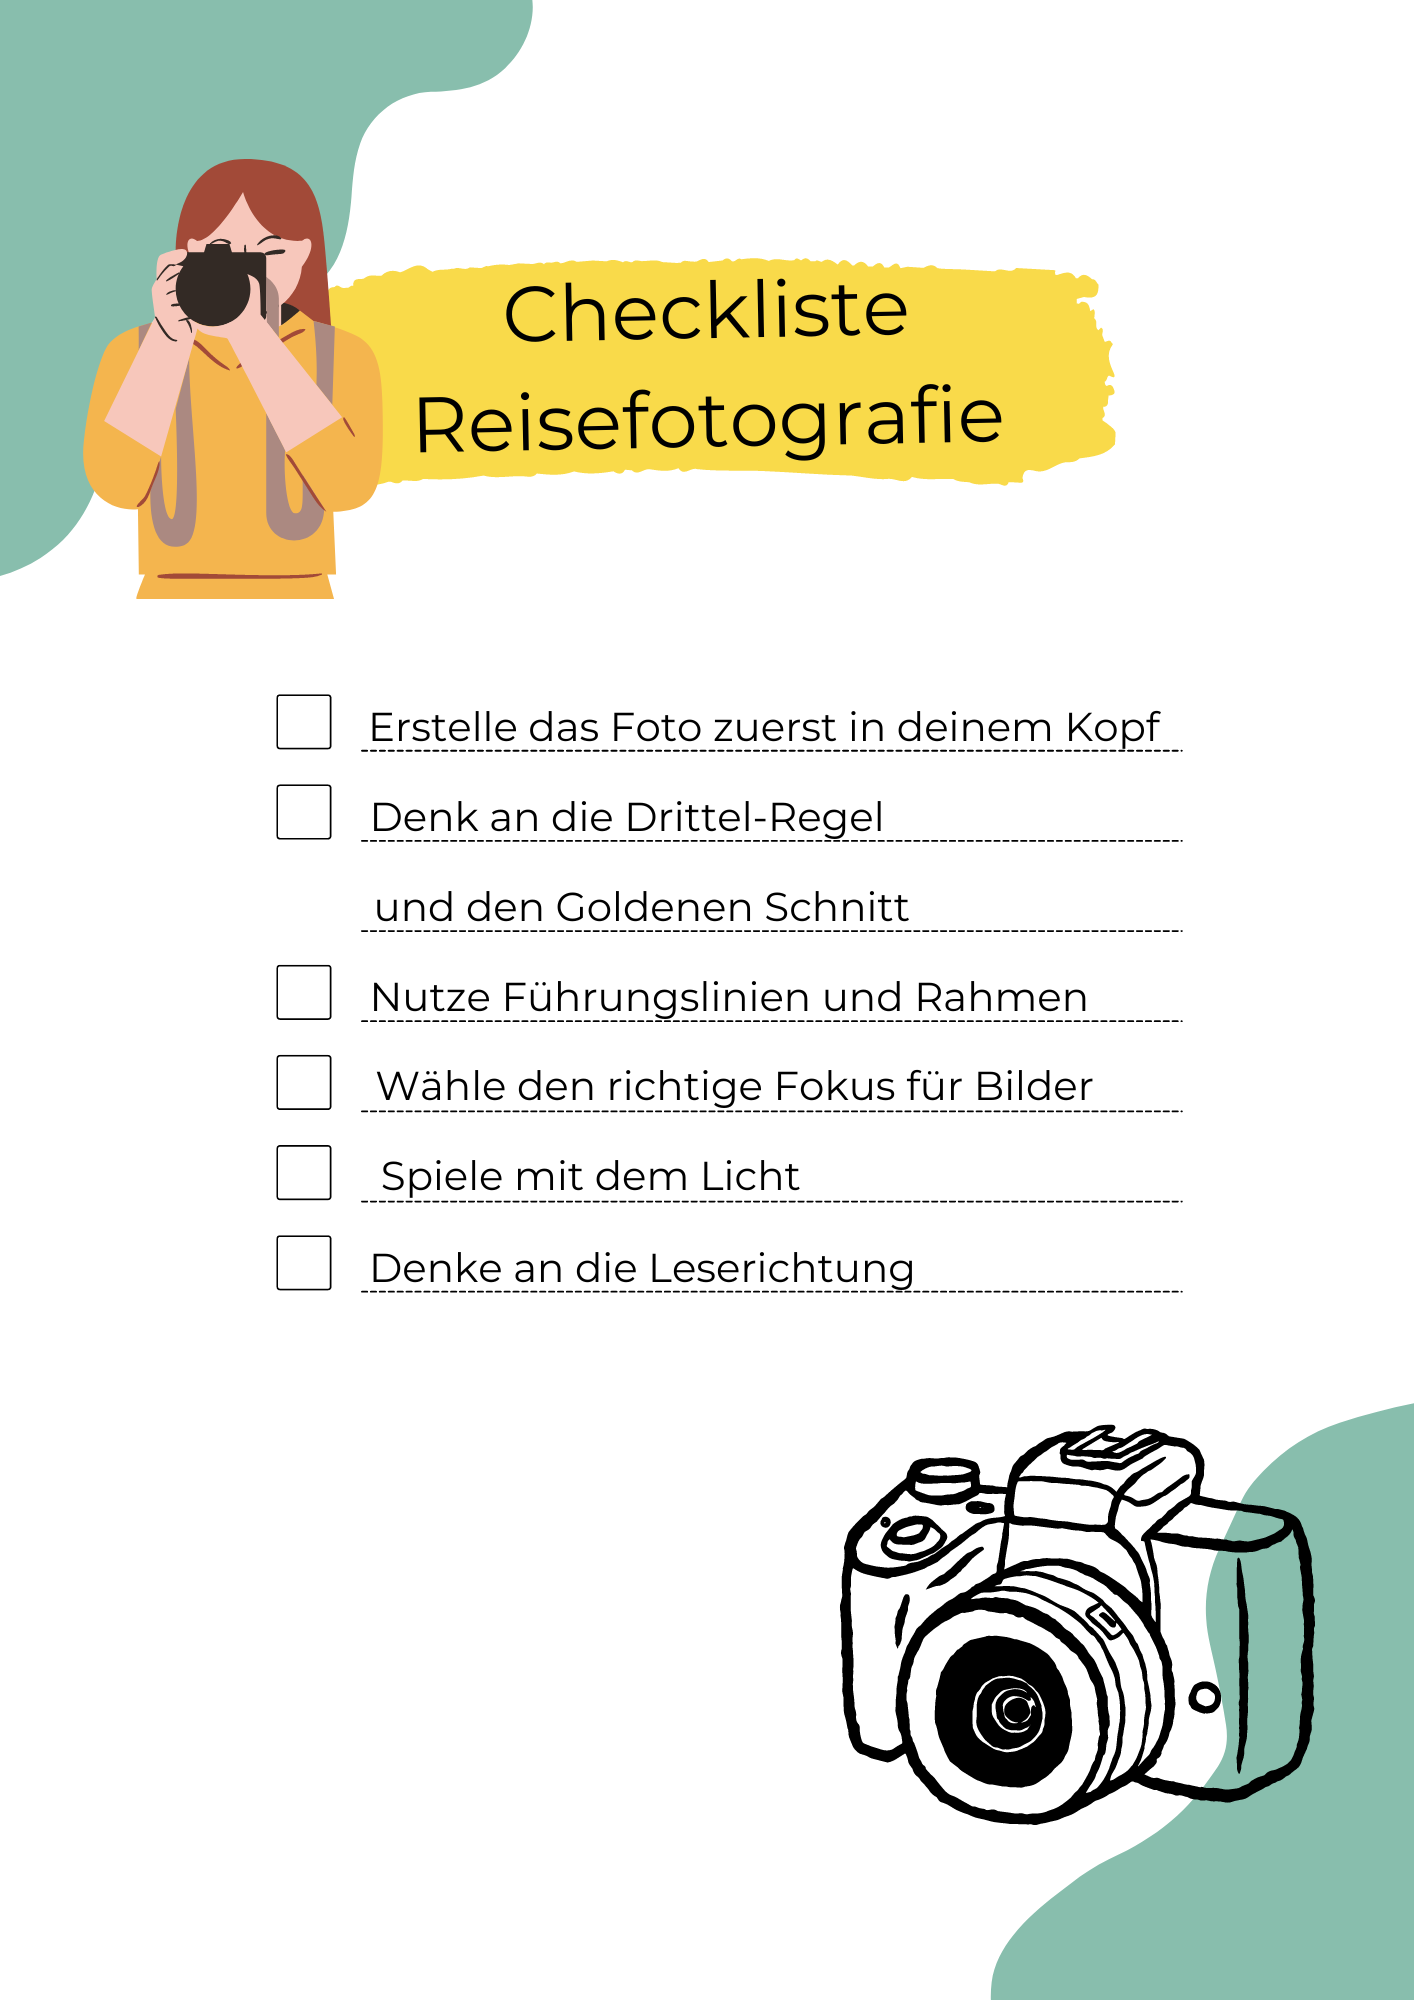 Checkliste Reisefotografie